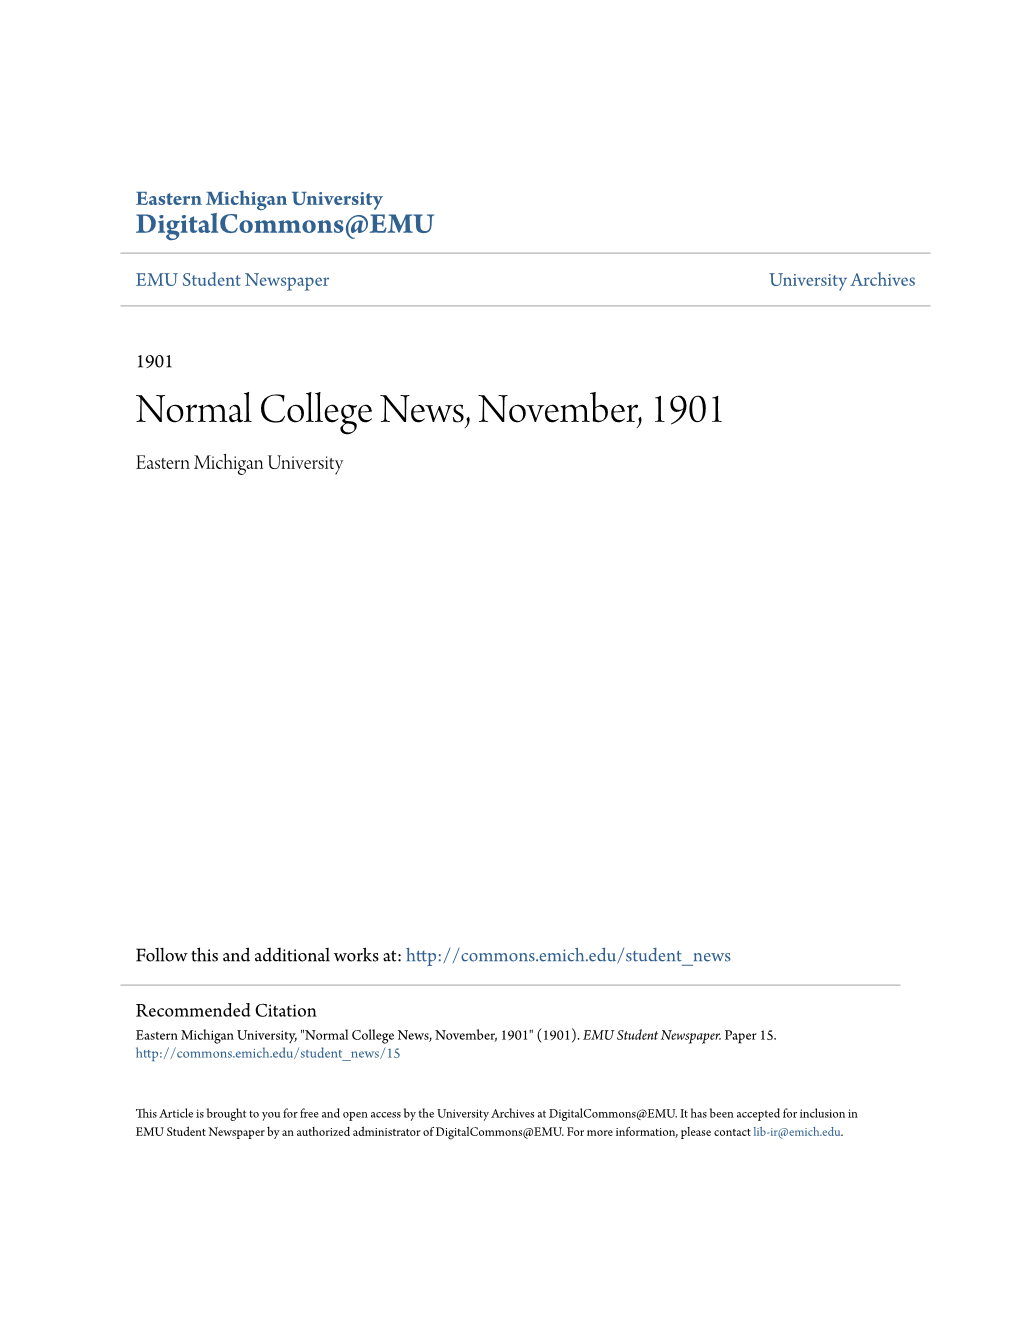 Normal College News, November, 1901 Eastern Michigan University